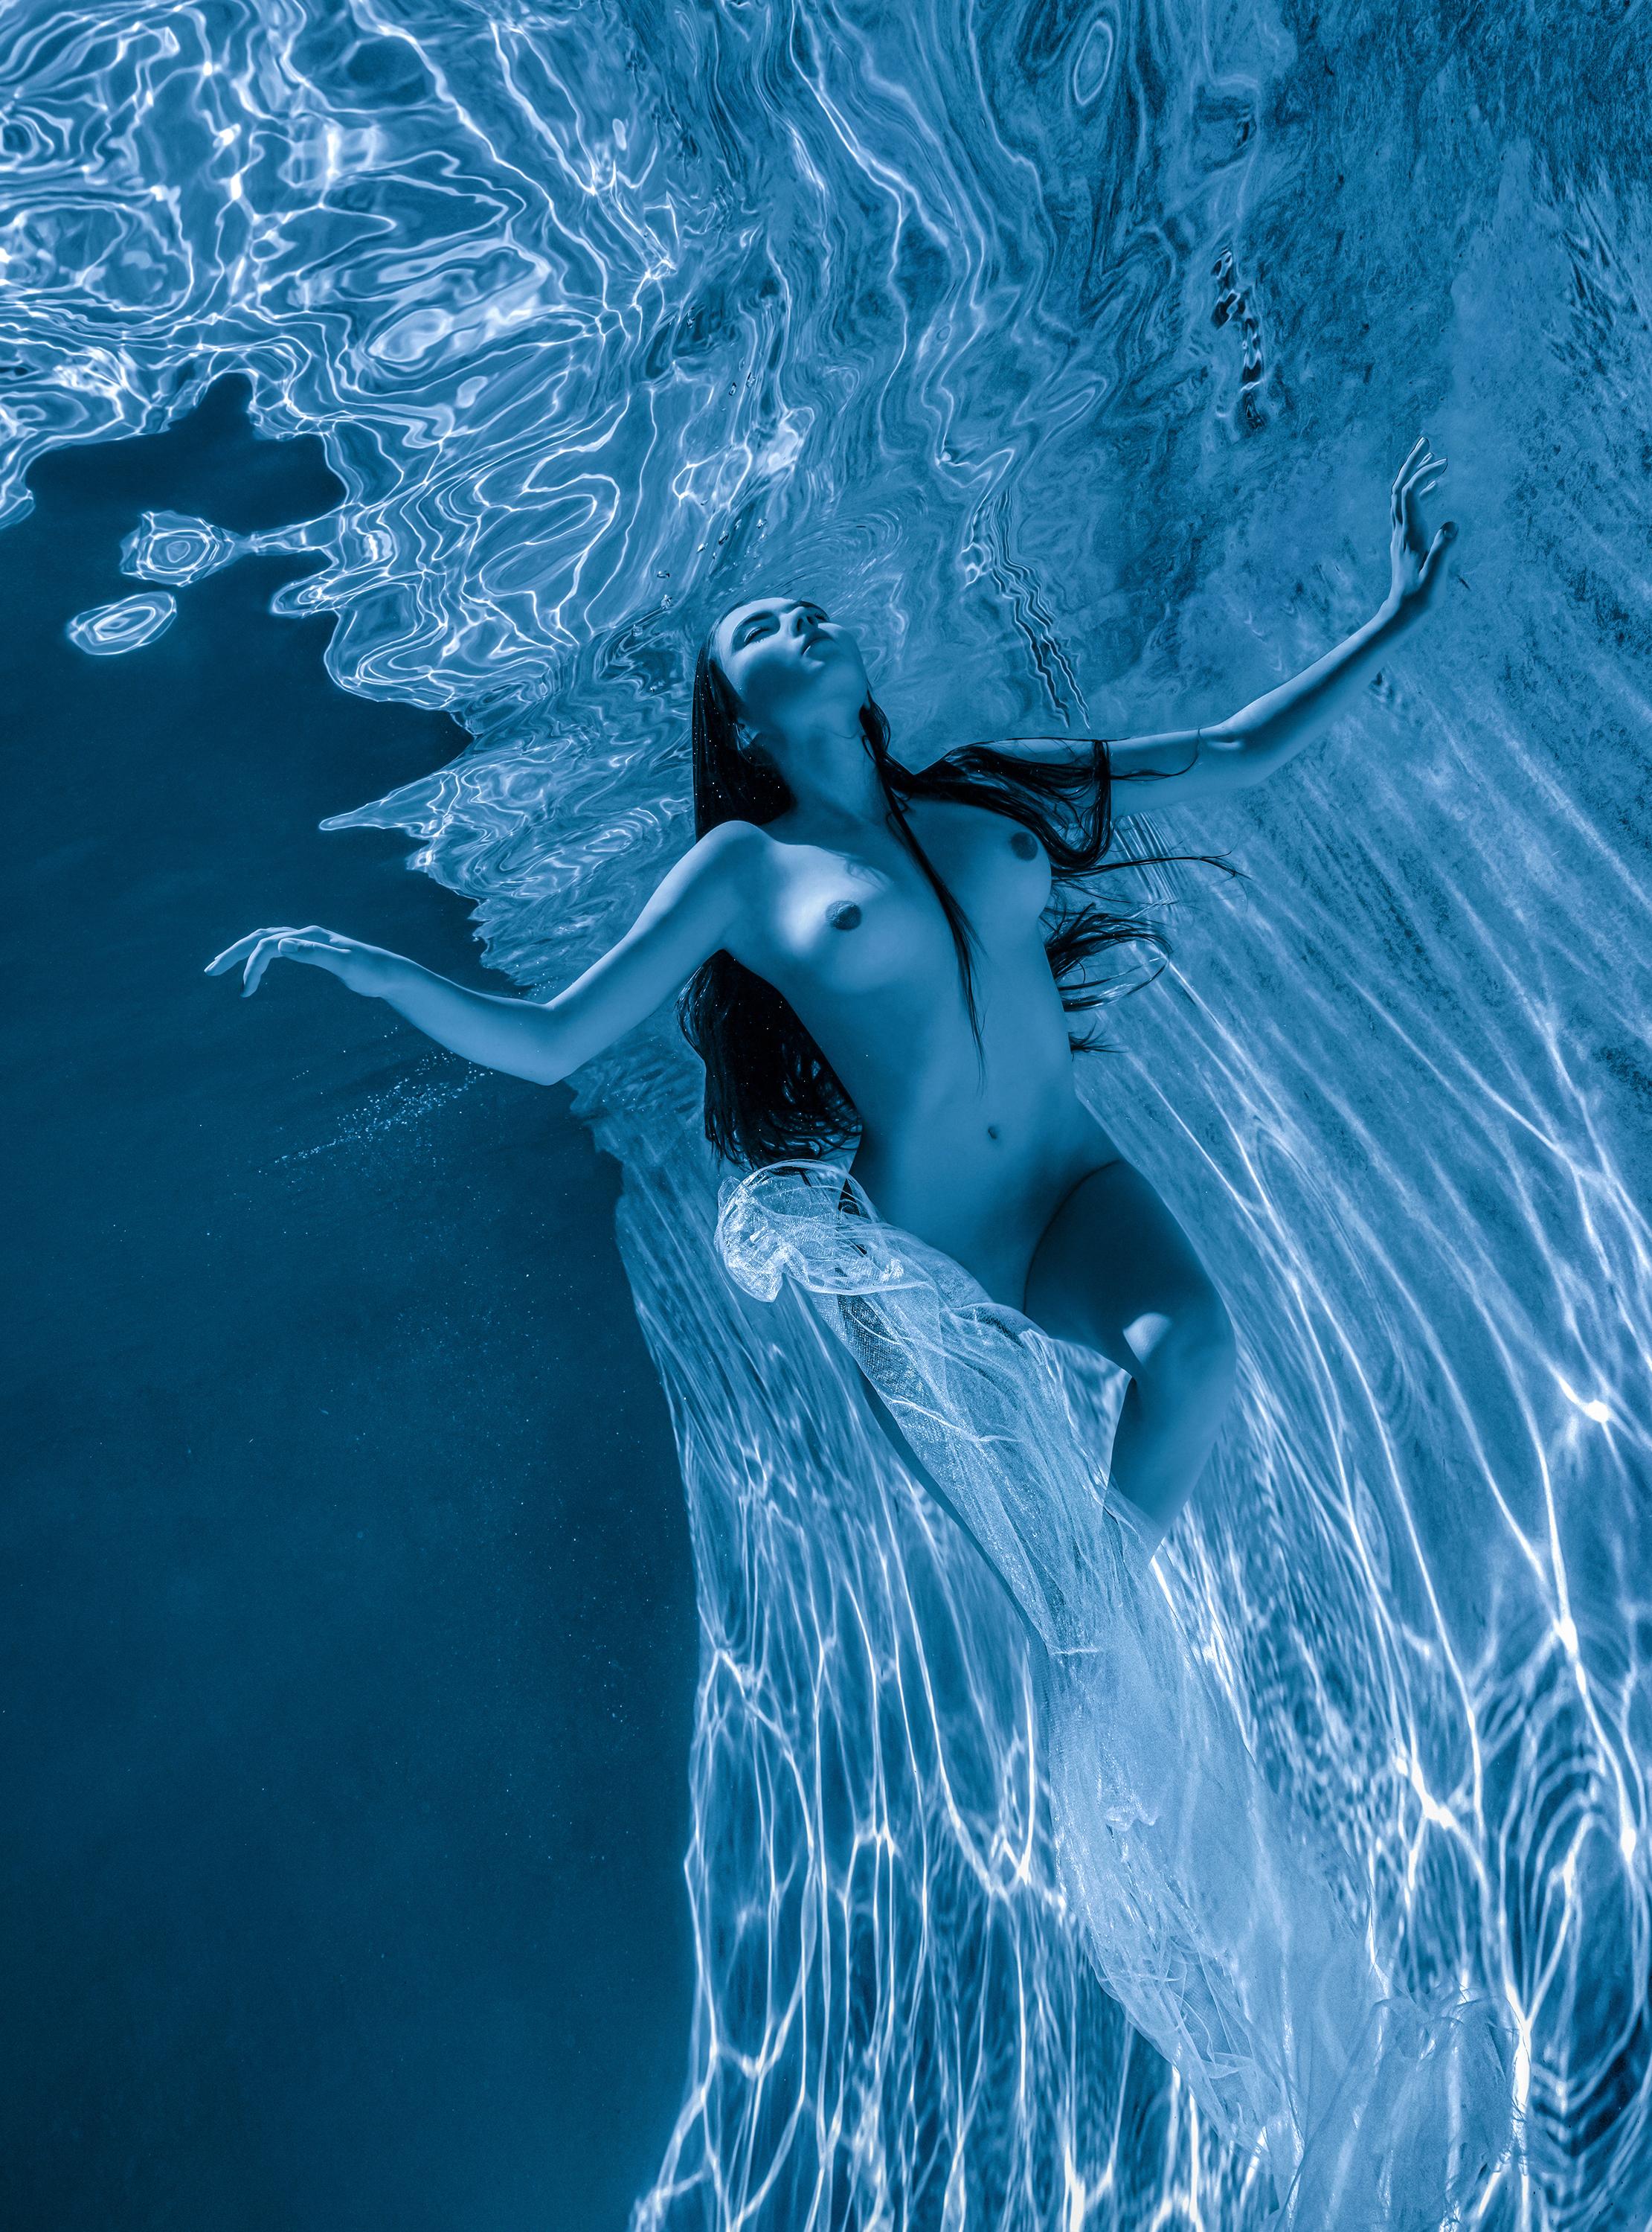 Freediver - underwater nude photograph - archival pigment print 24x18"